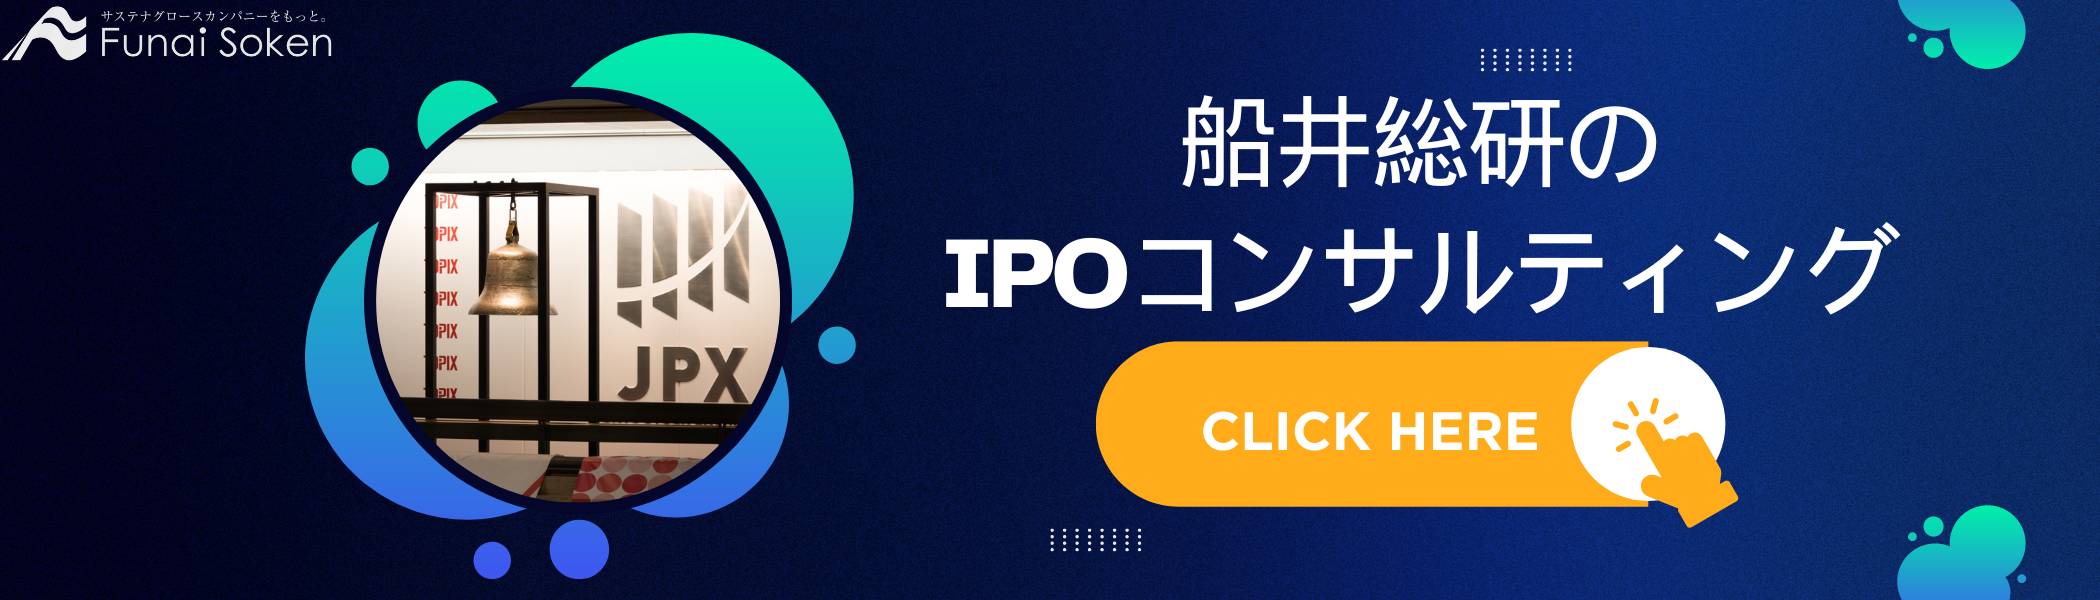 船井総研IPO